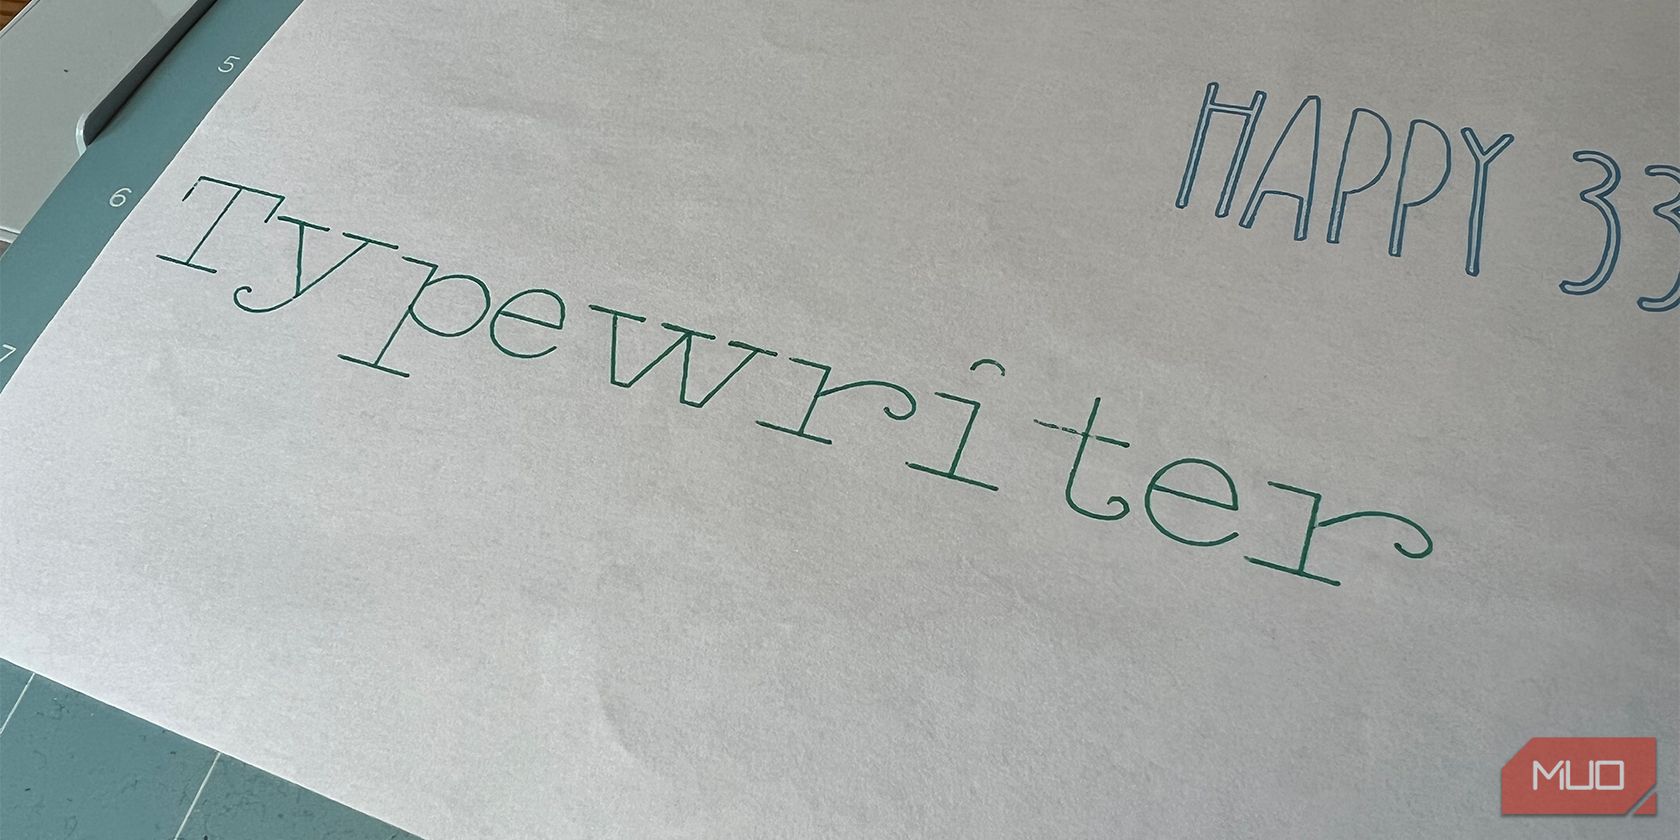 Cricut Typewriter text written on paper.